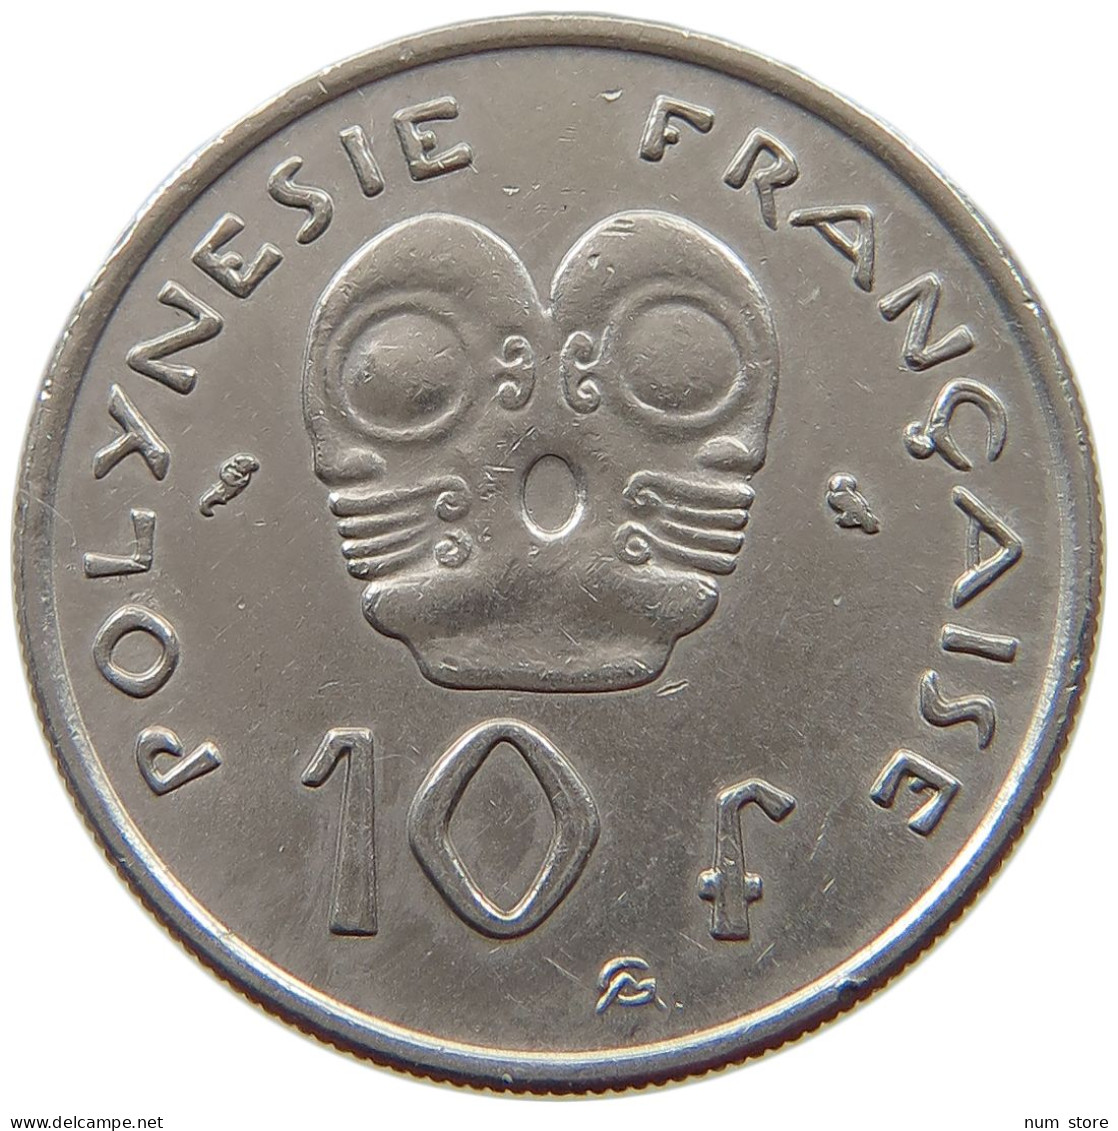 POLYNESIA 10 FRANCS 1973  #a015 0683 - Französisch-Polynesien